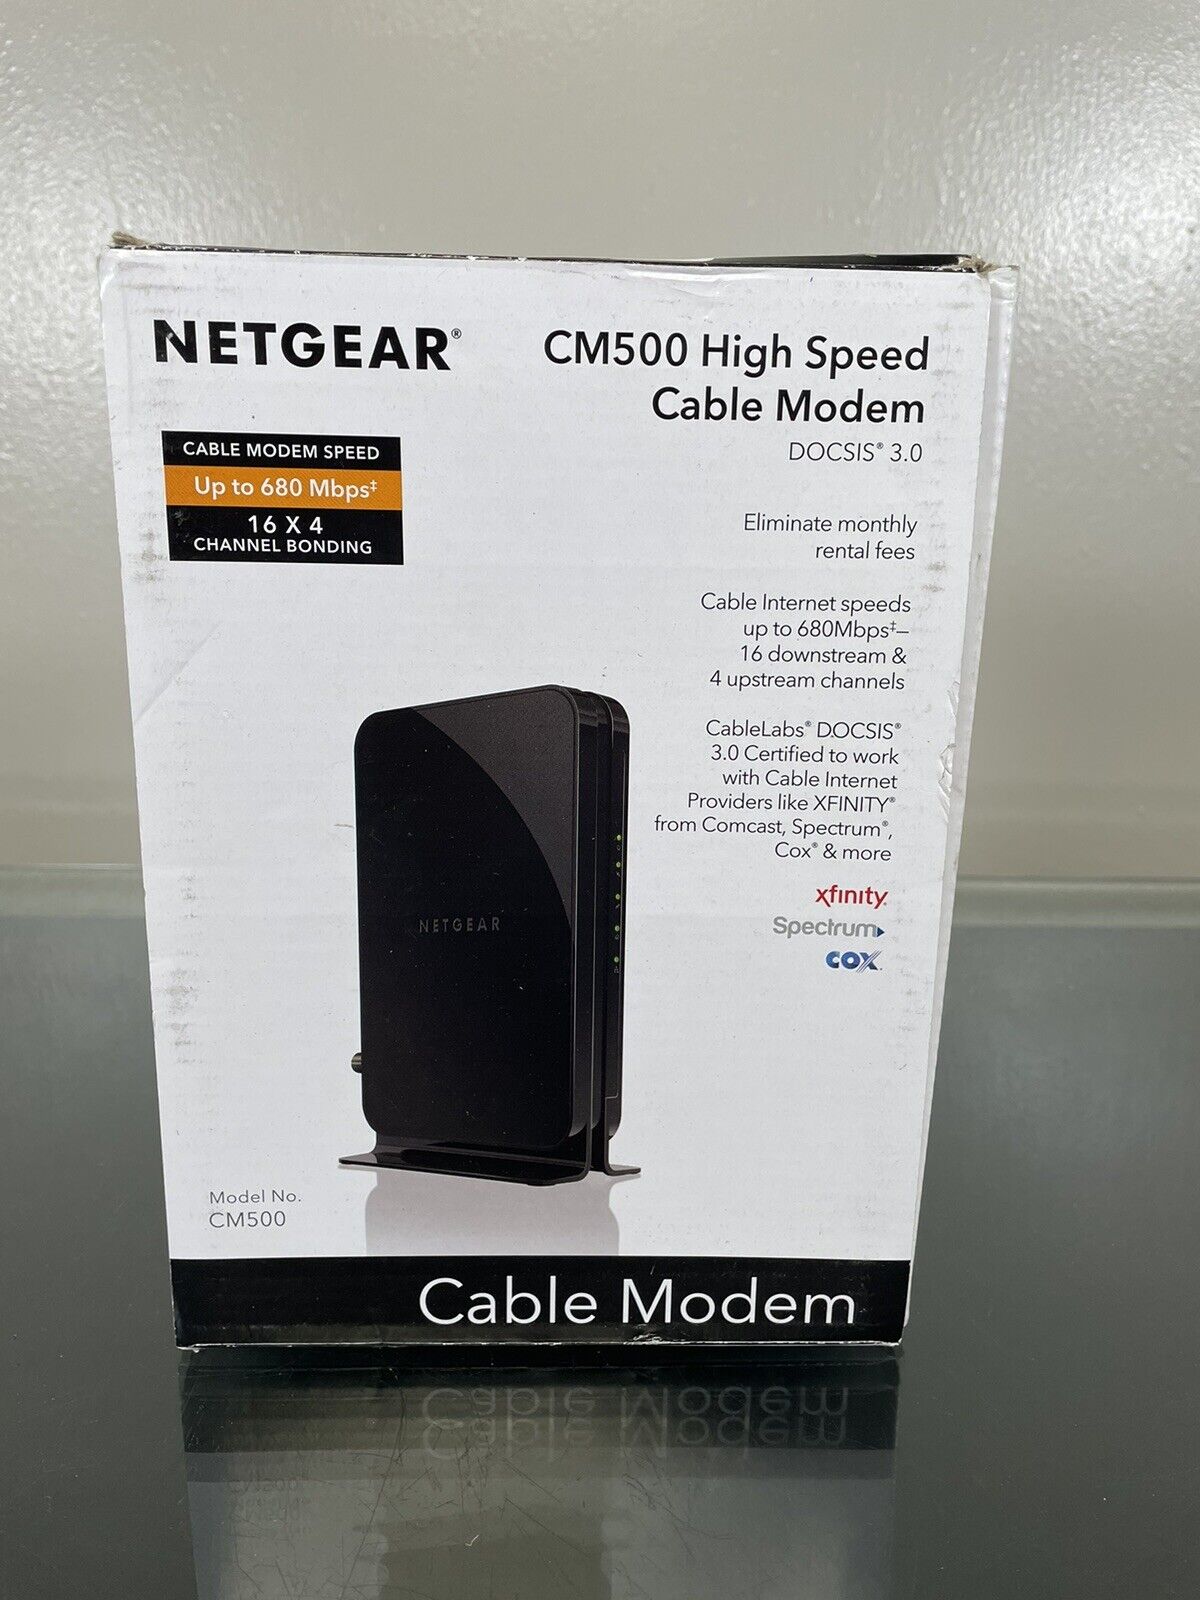 NETGEAR Cm500 16x4 DOCSIS 3.0 Cable Modem Max Download Speeds of 686mbps